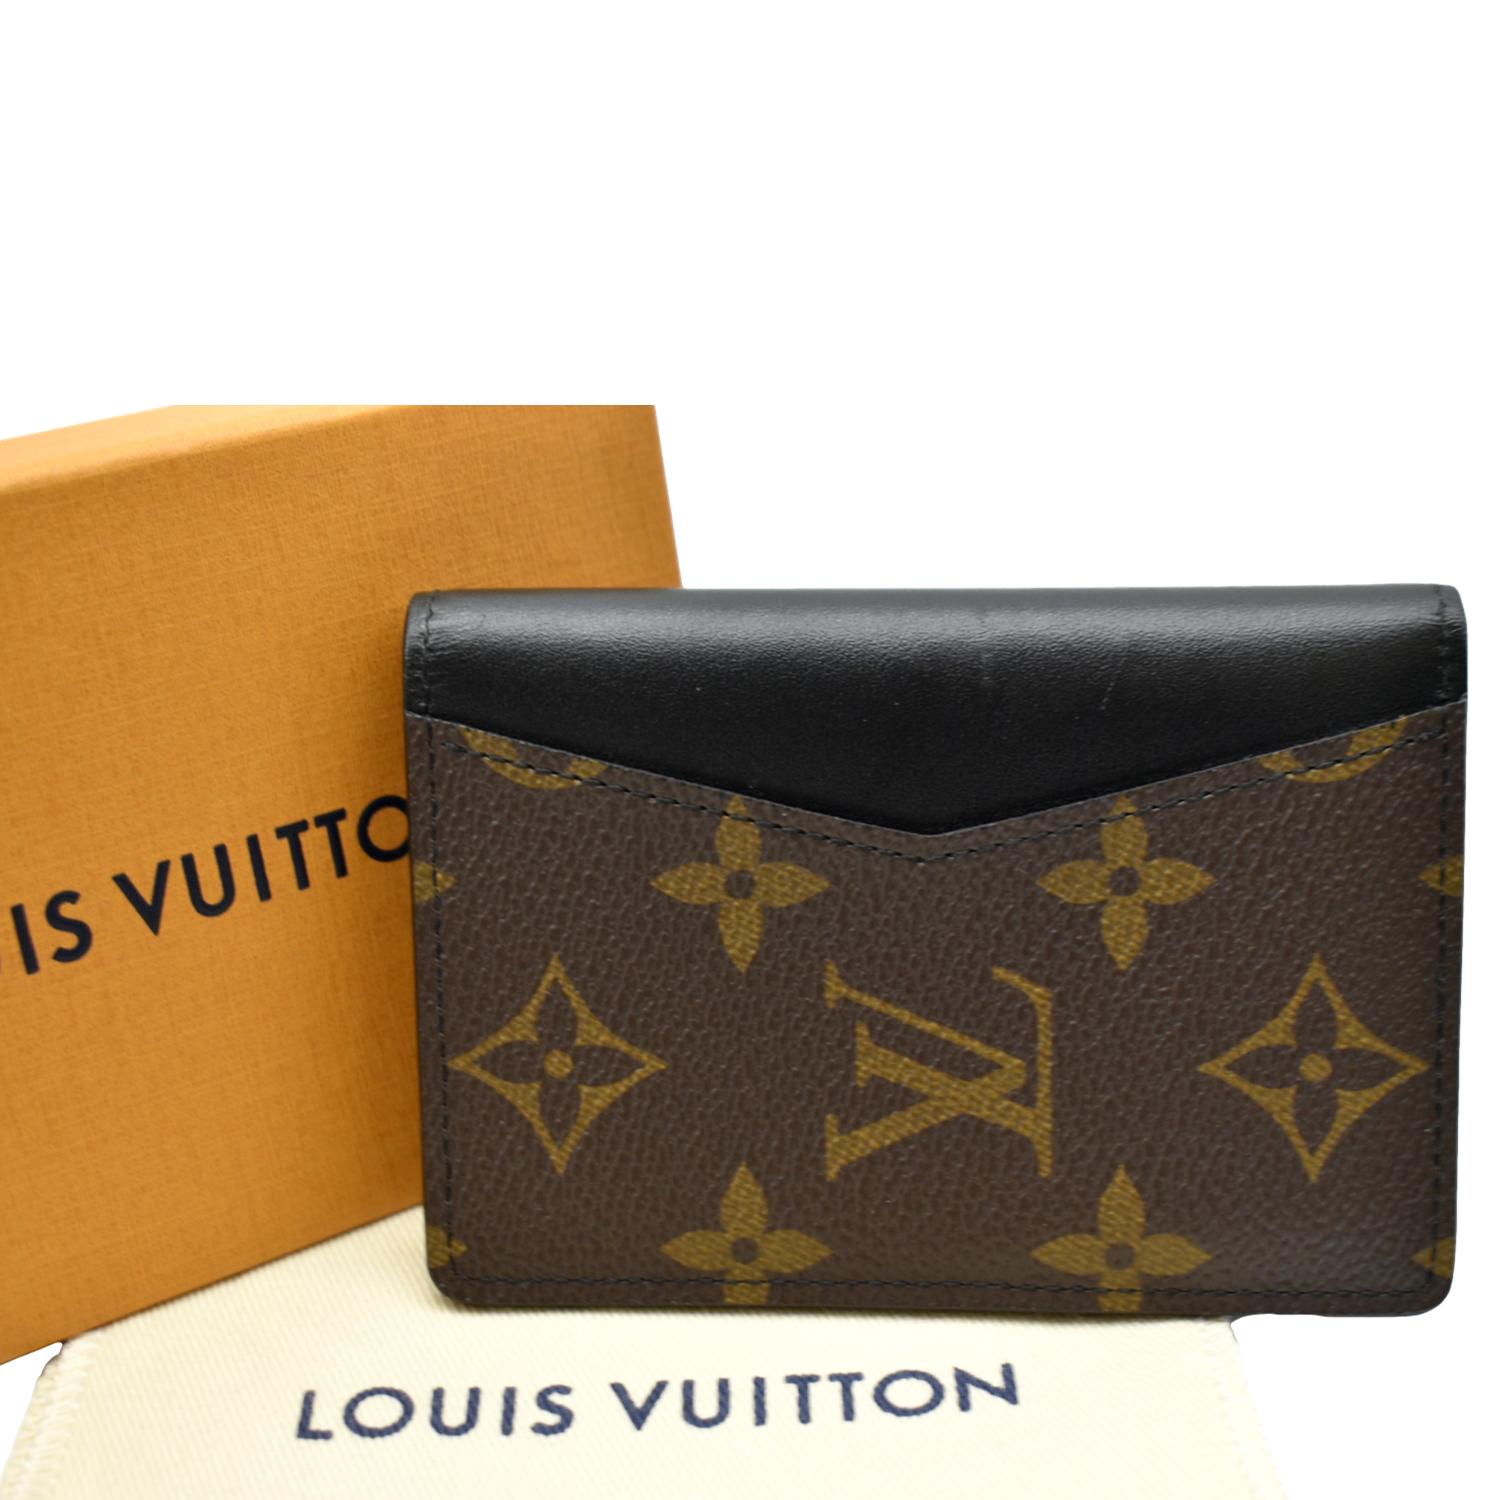 Louis Vuitton Neo Porte Cartes, Best LV Card Holder!